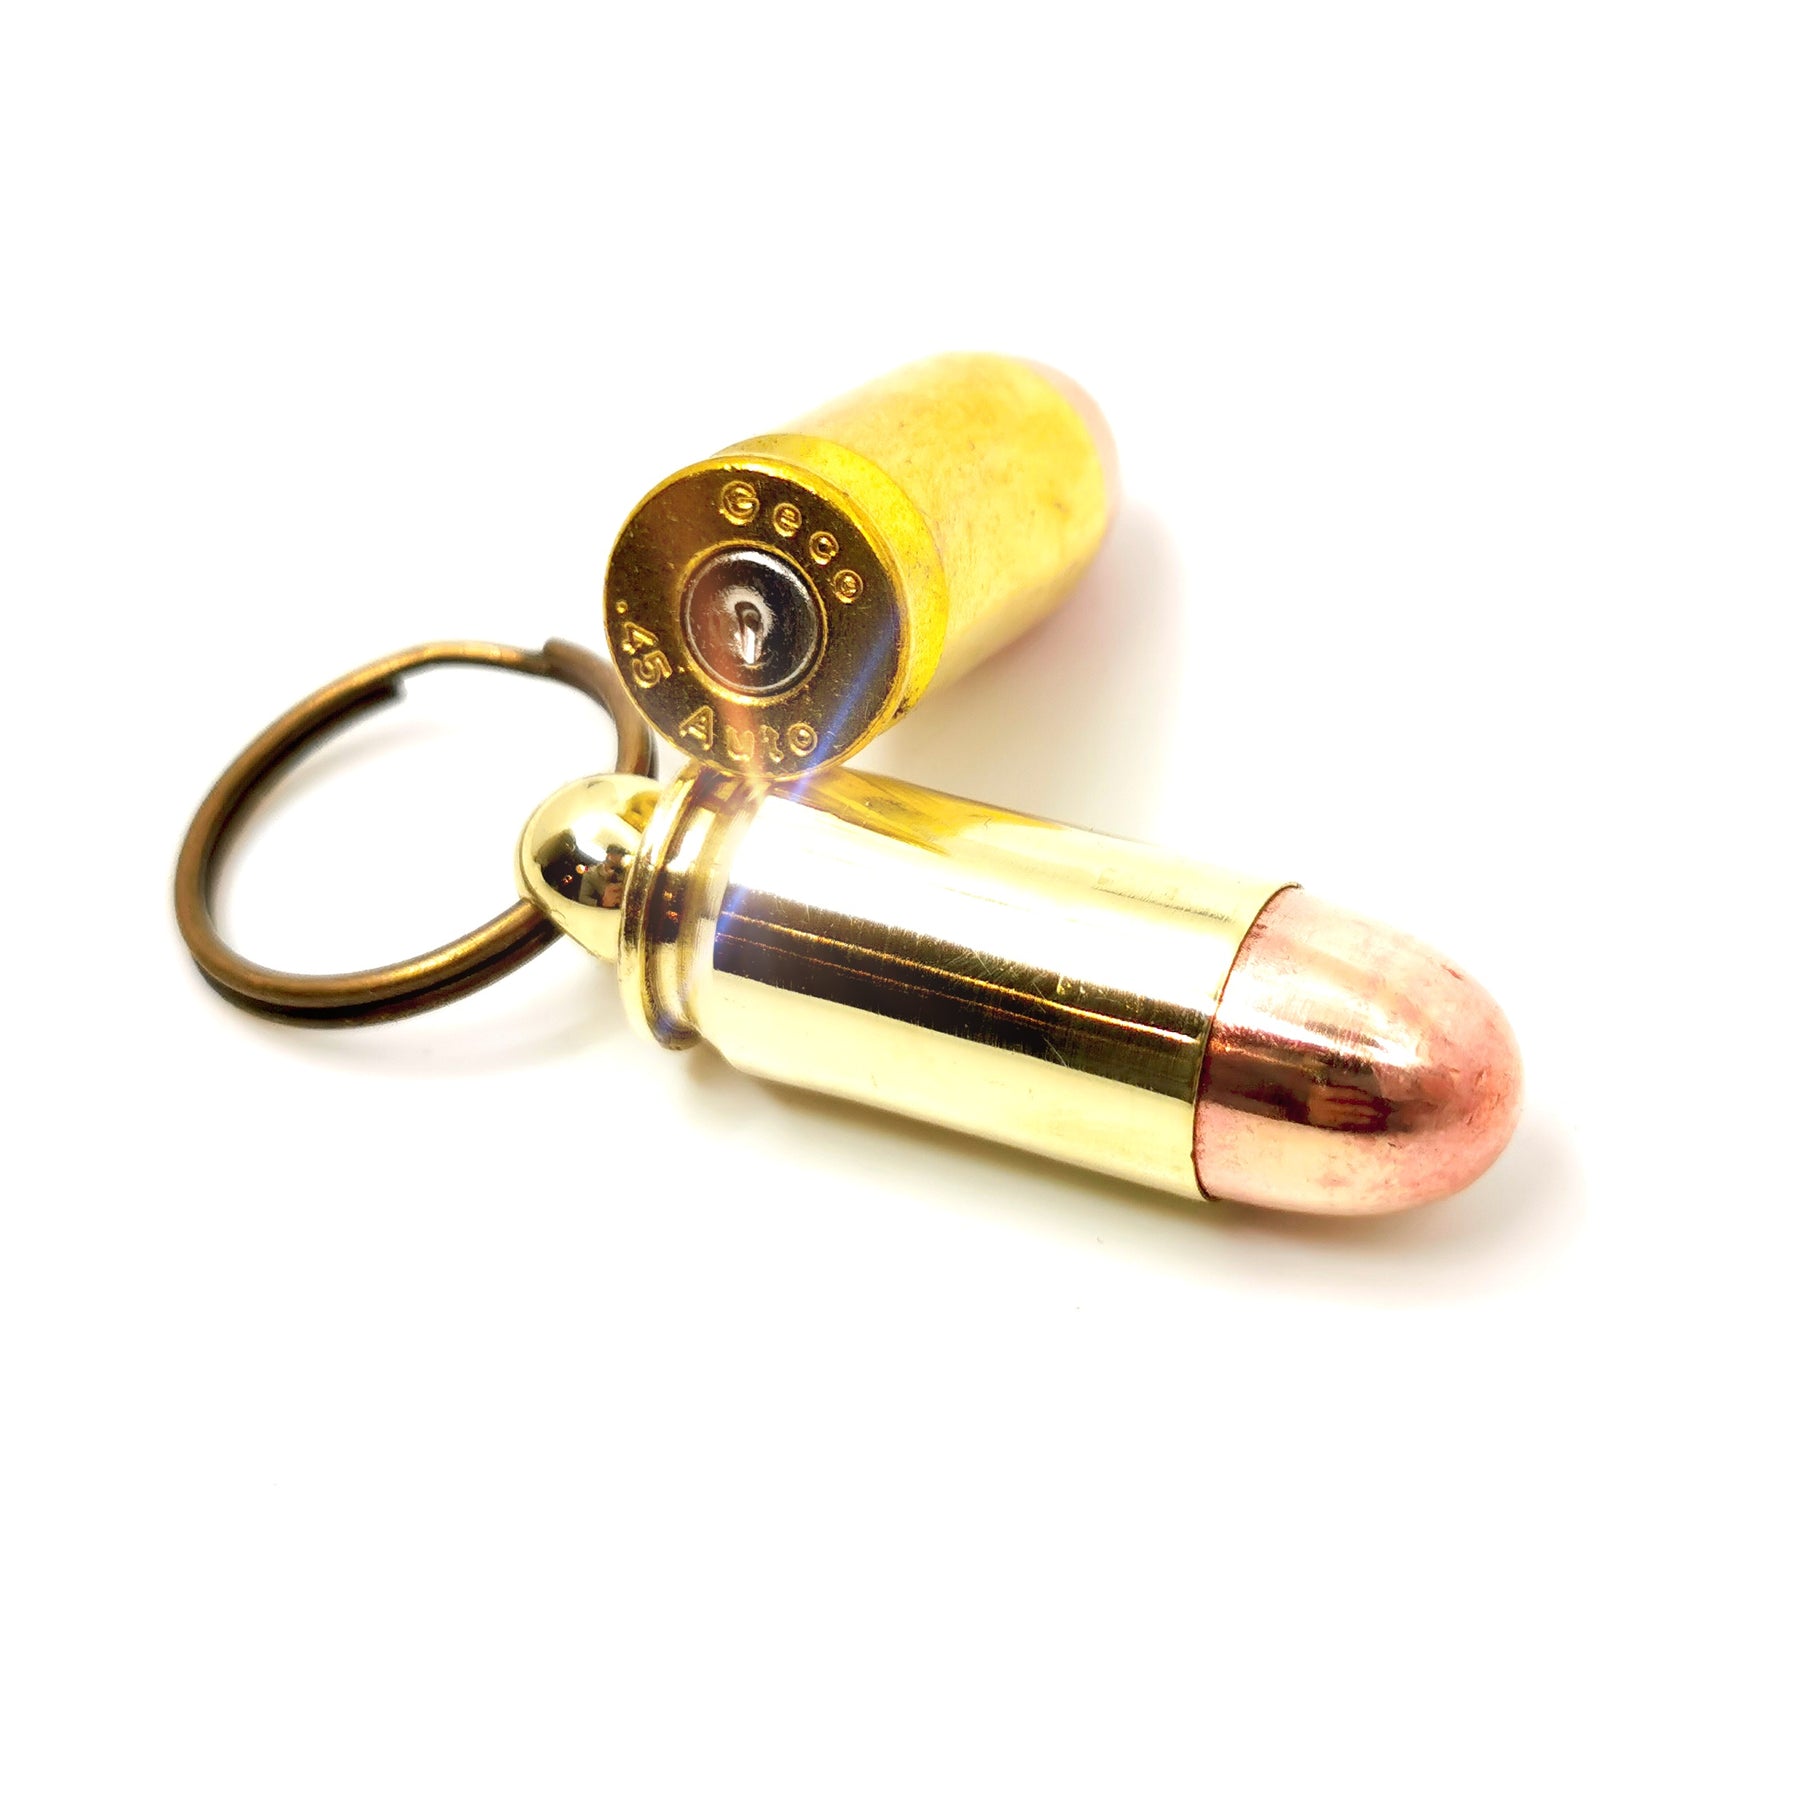 The .45 ACP Bullet Key Ring